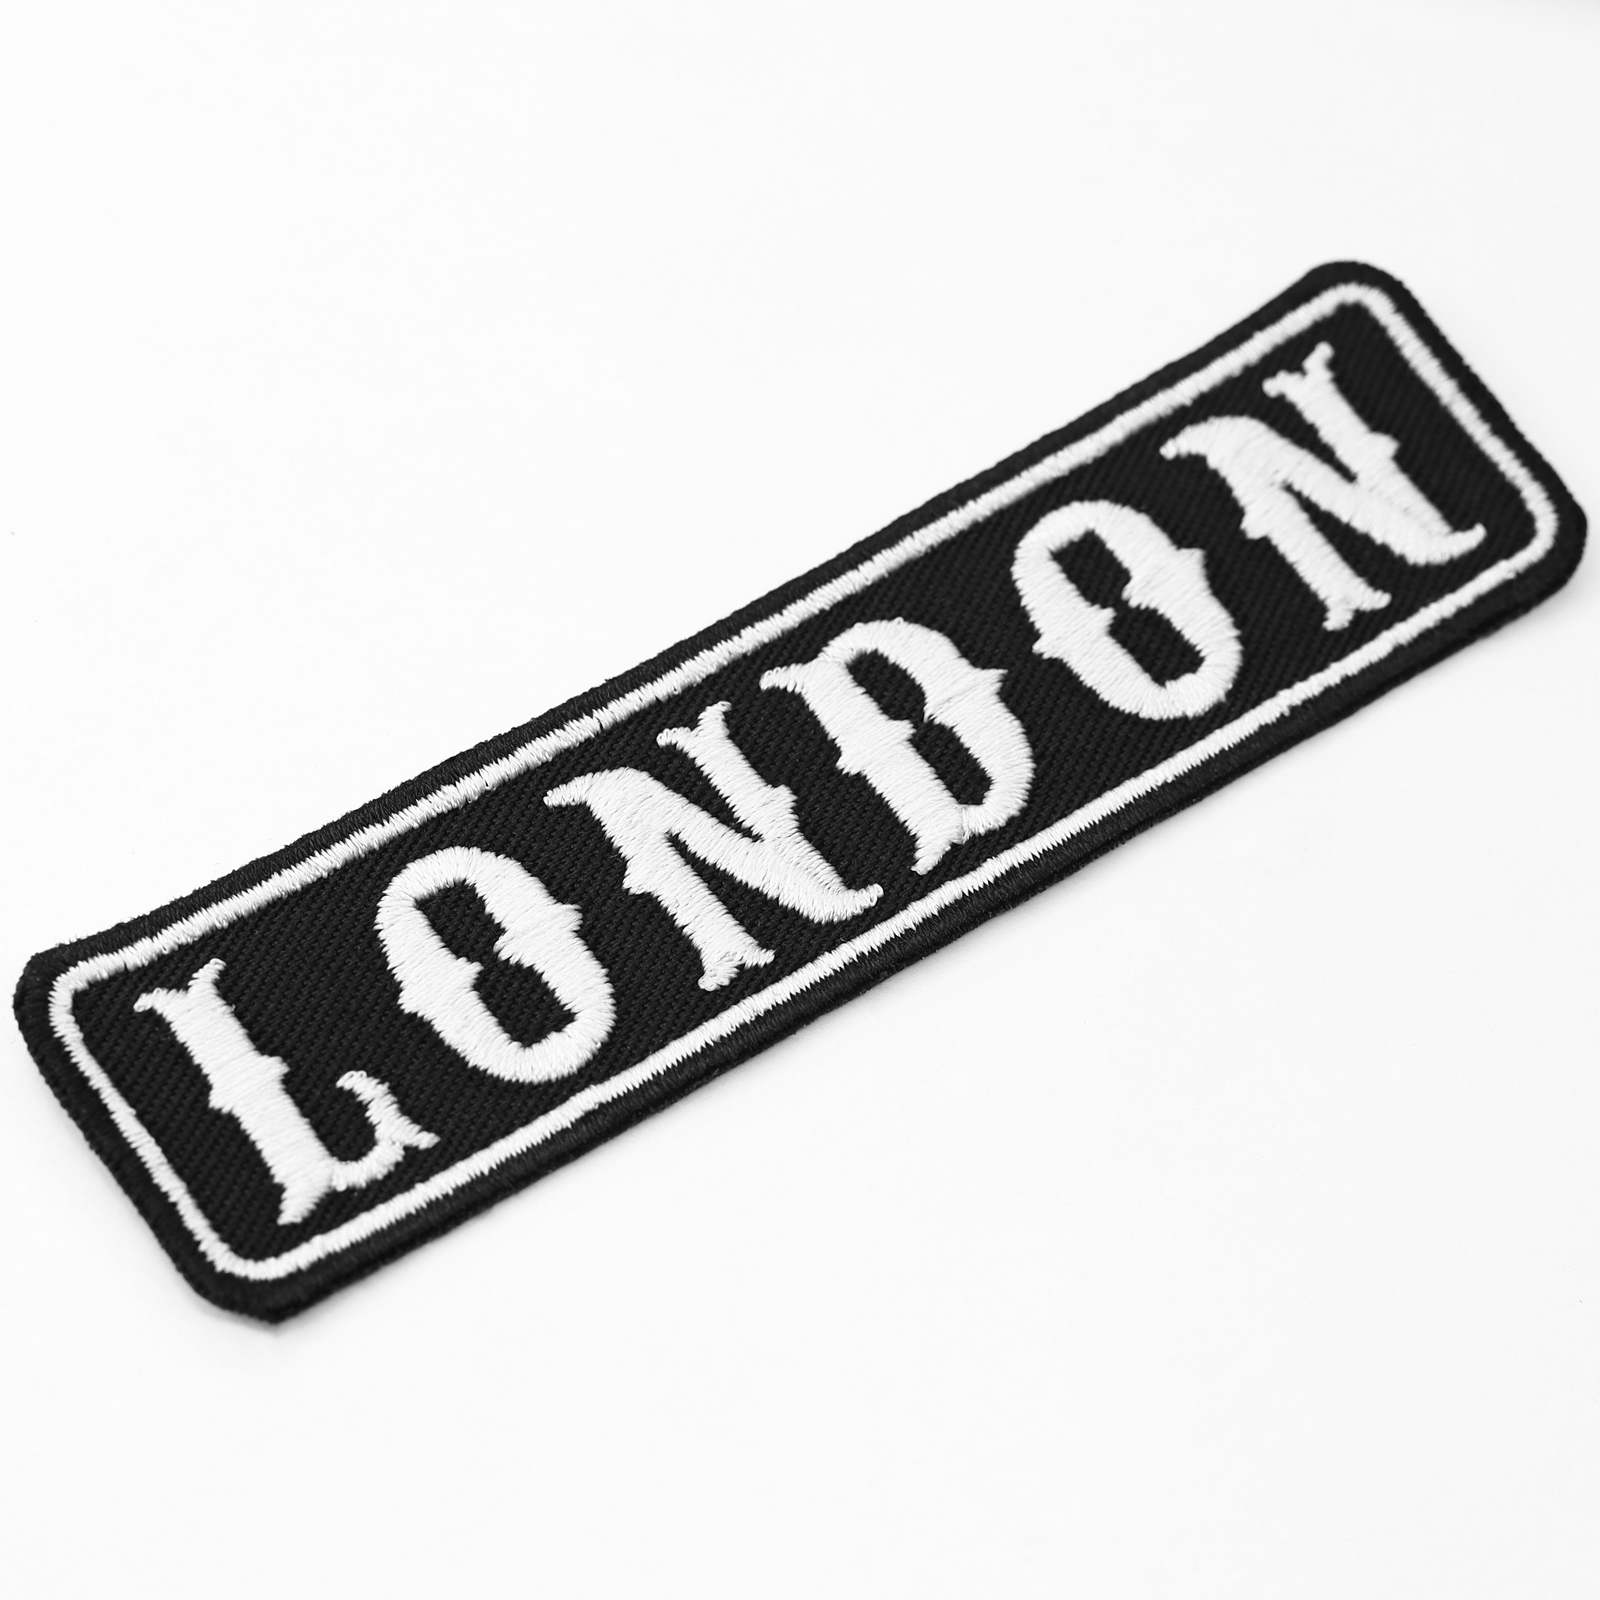 London - Patch